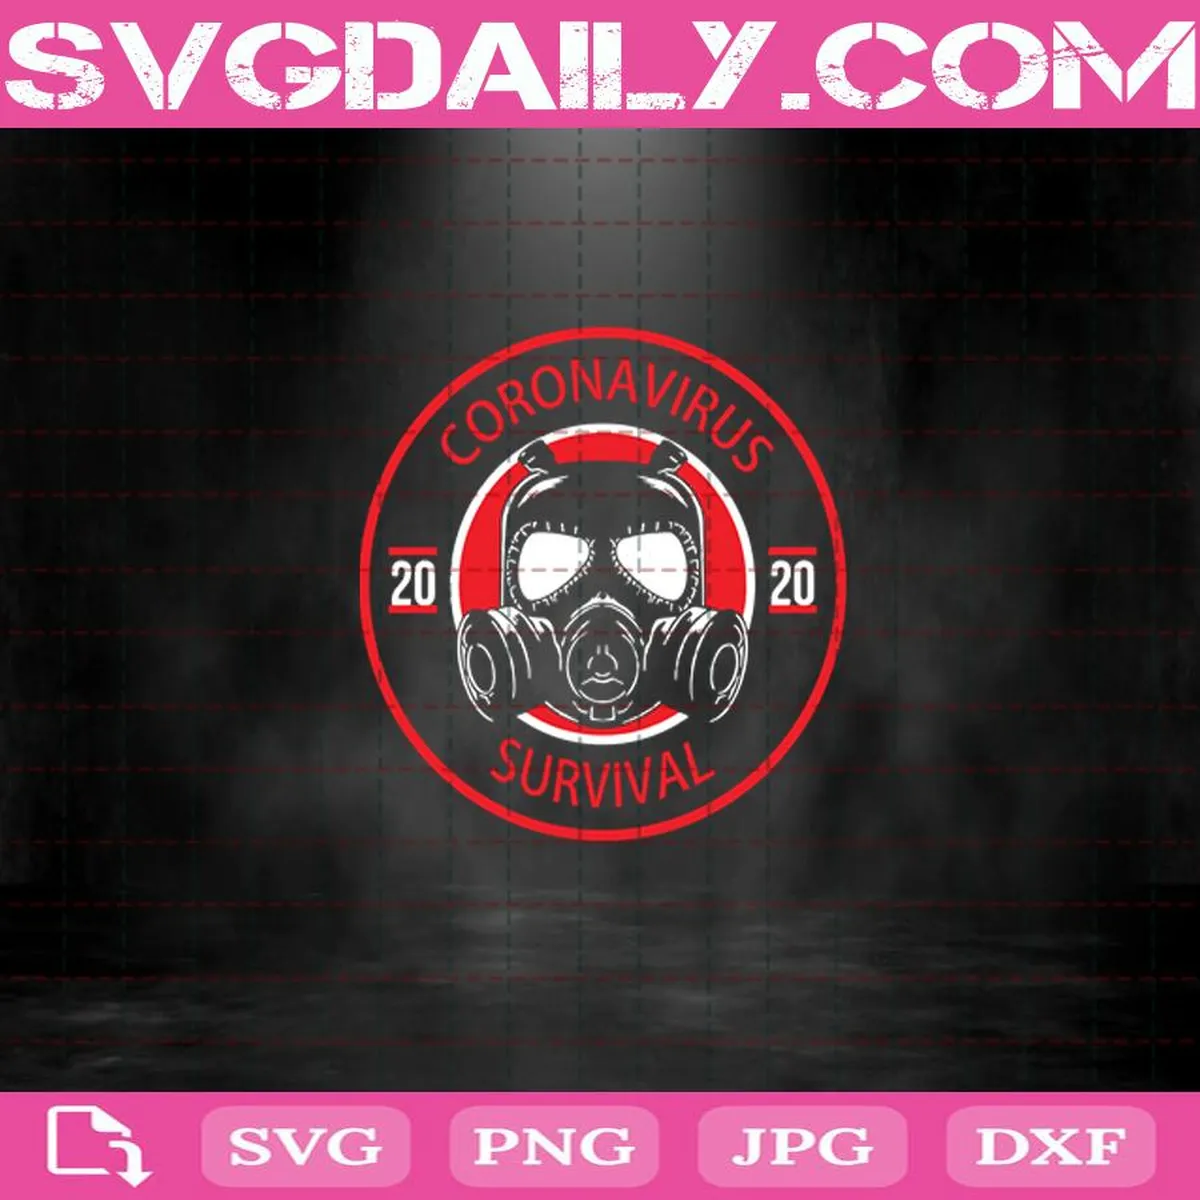 Coronavirus Survival 2020 Svg, Coronavirus Svg, Covid Svg, Survival Svg, Svg Png Dxf Eps AI Instant Download